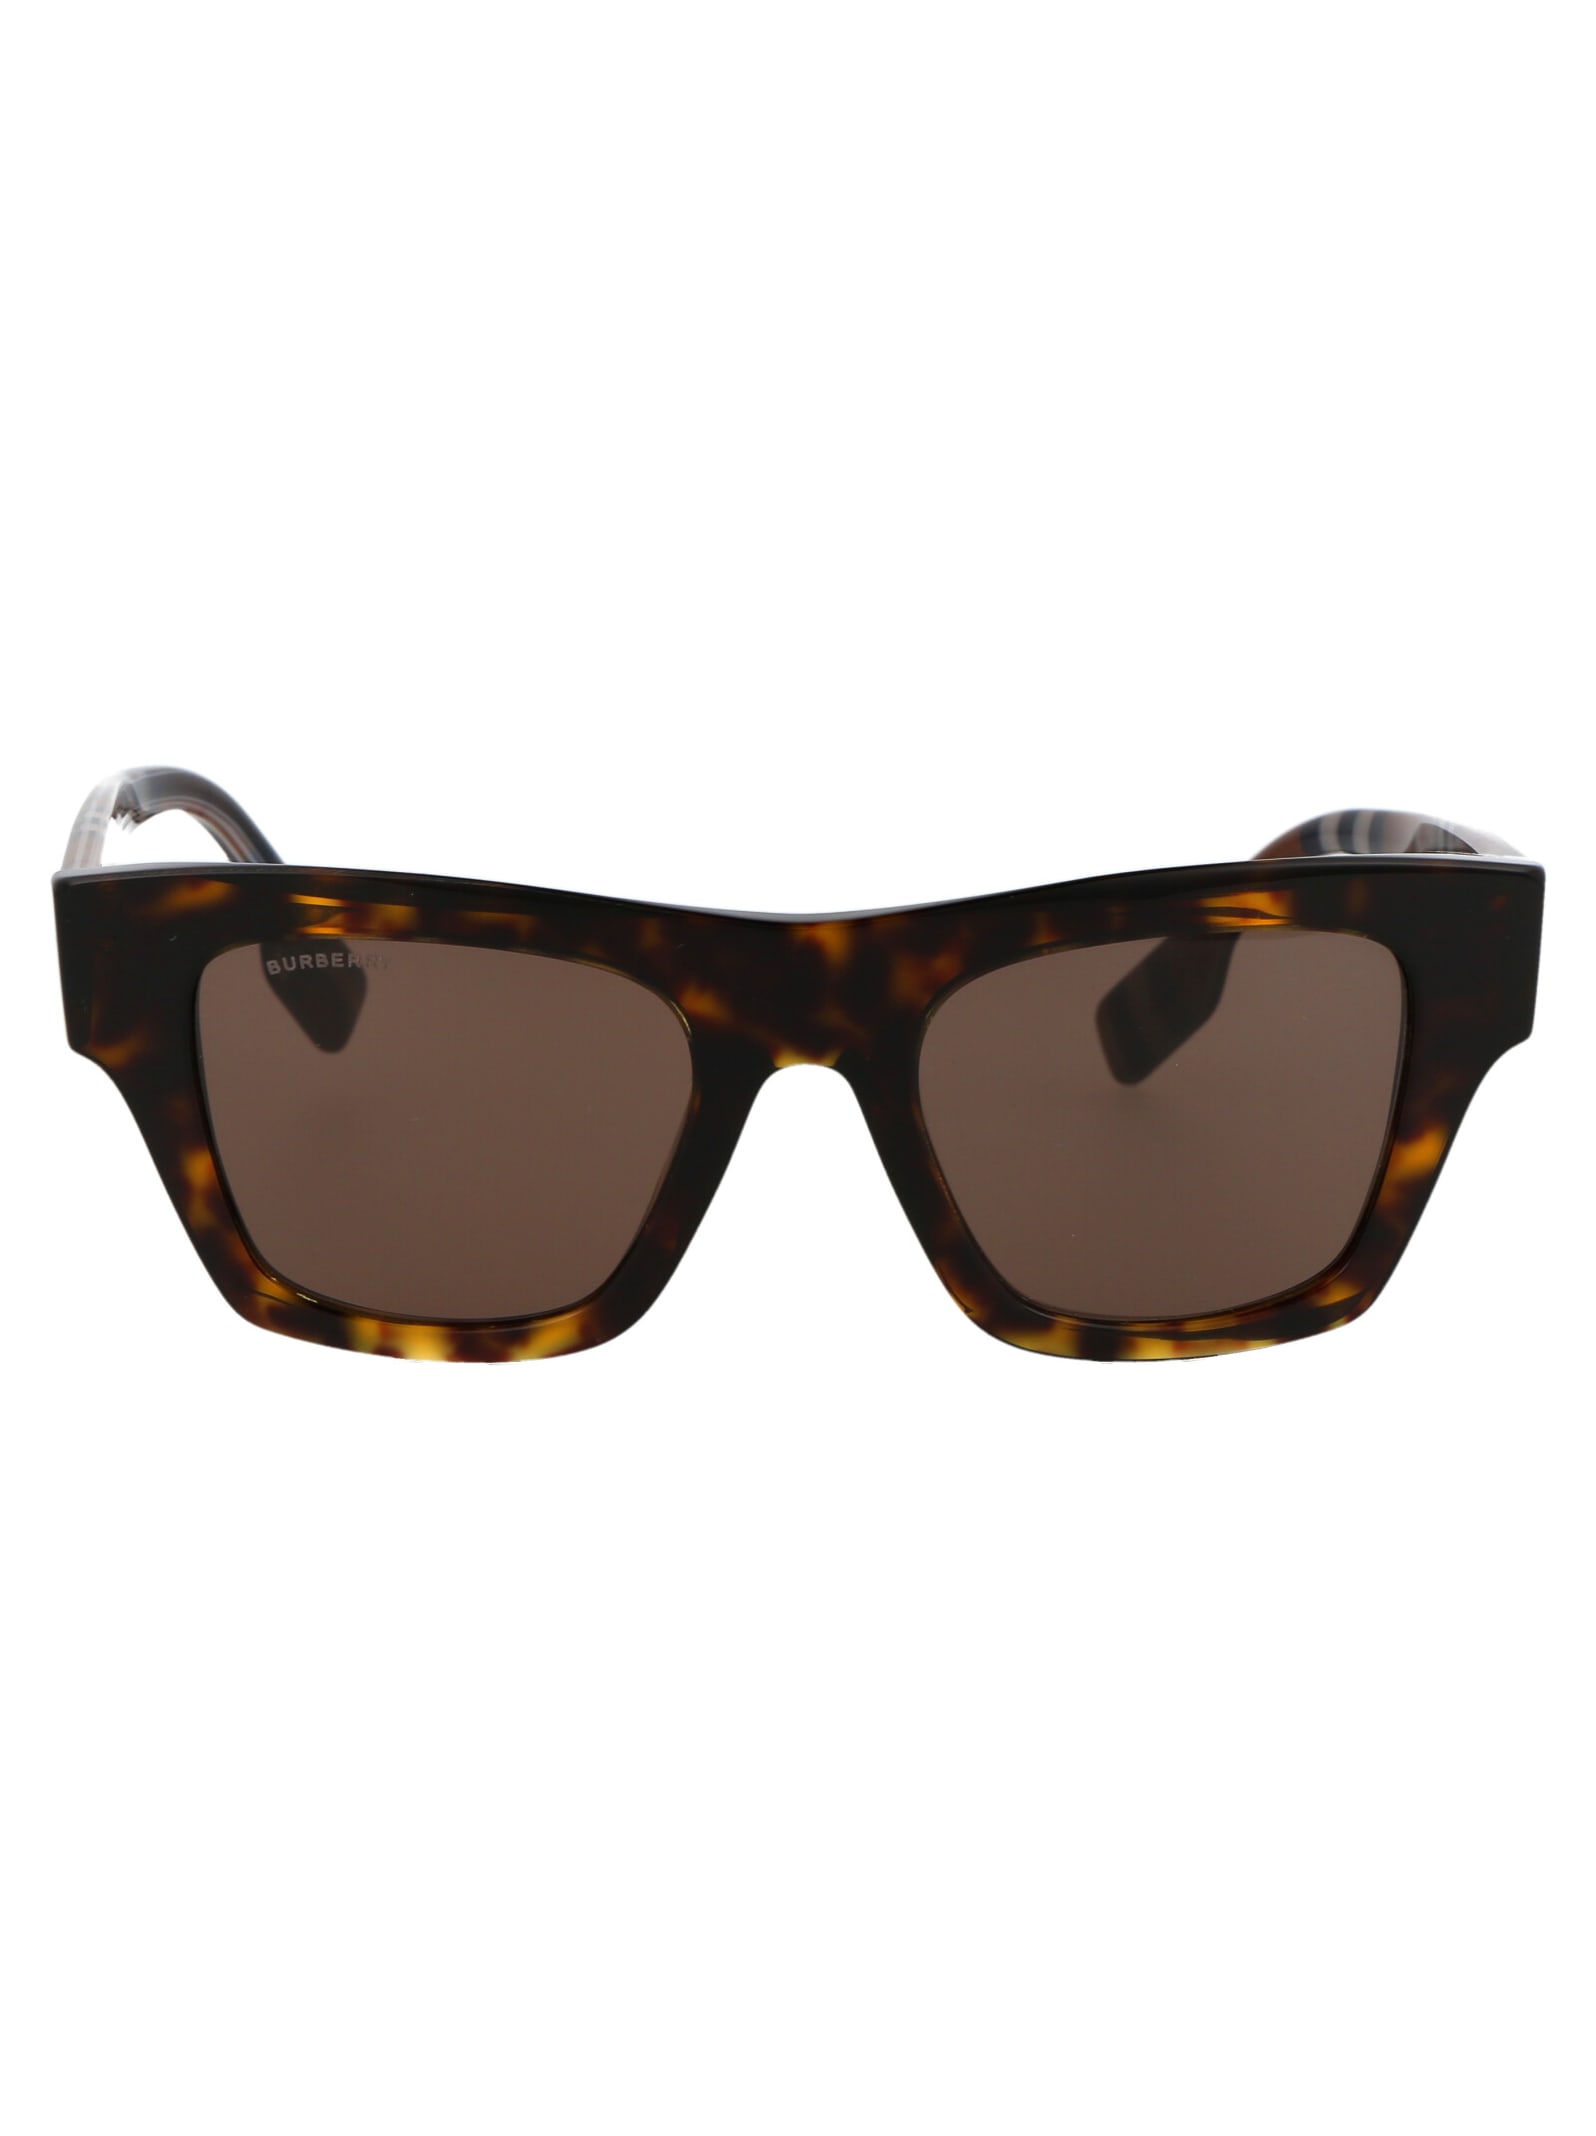 Burberry Eyewear Ernest Sunglasses